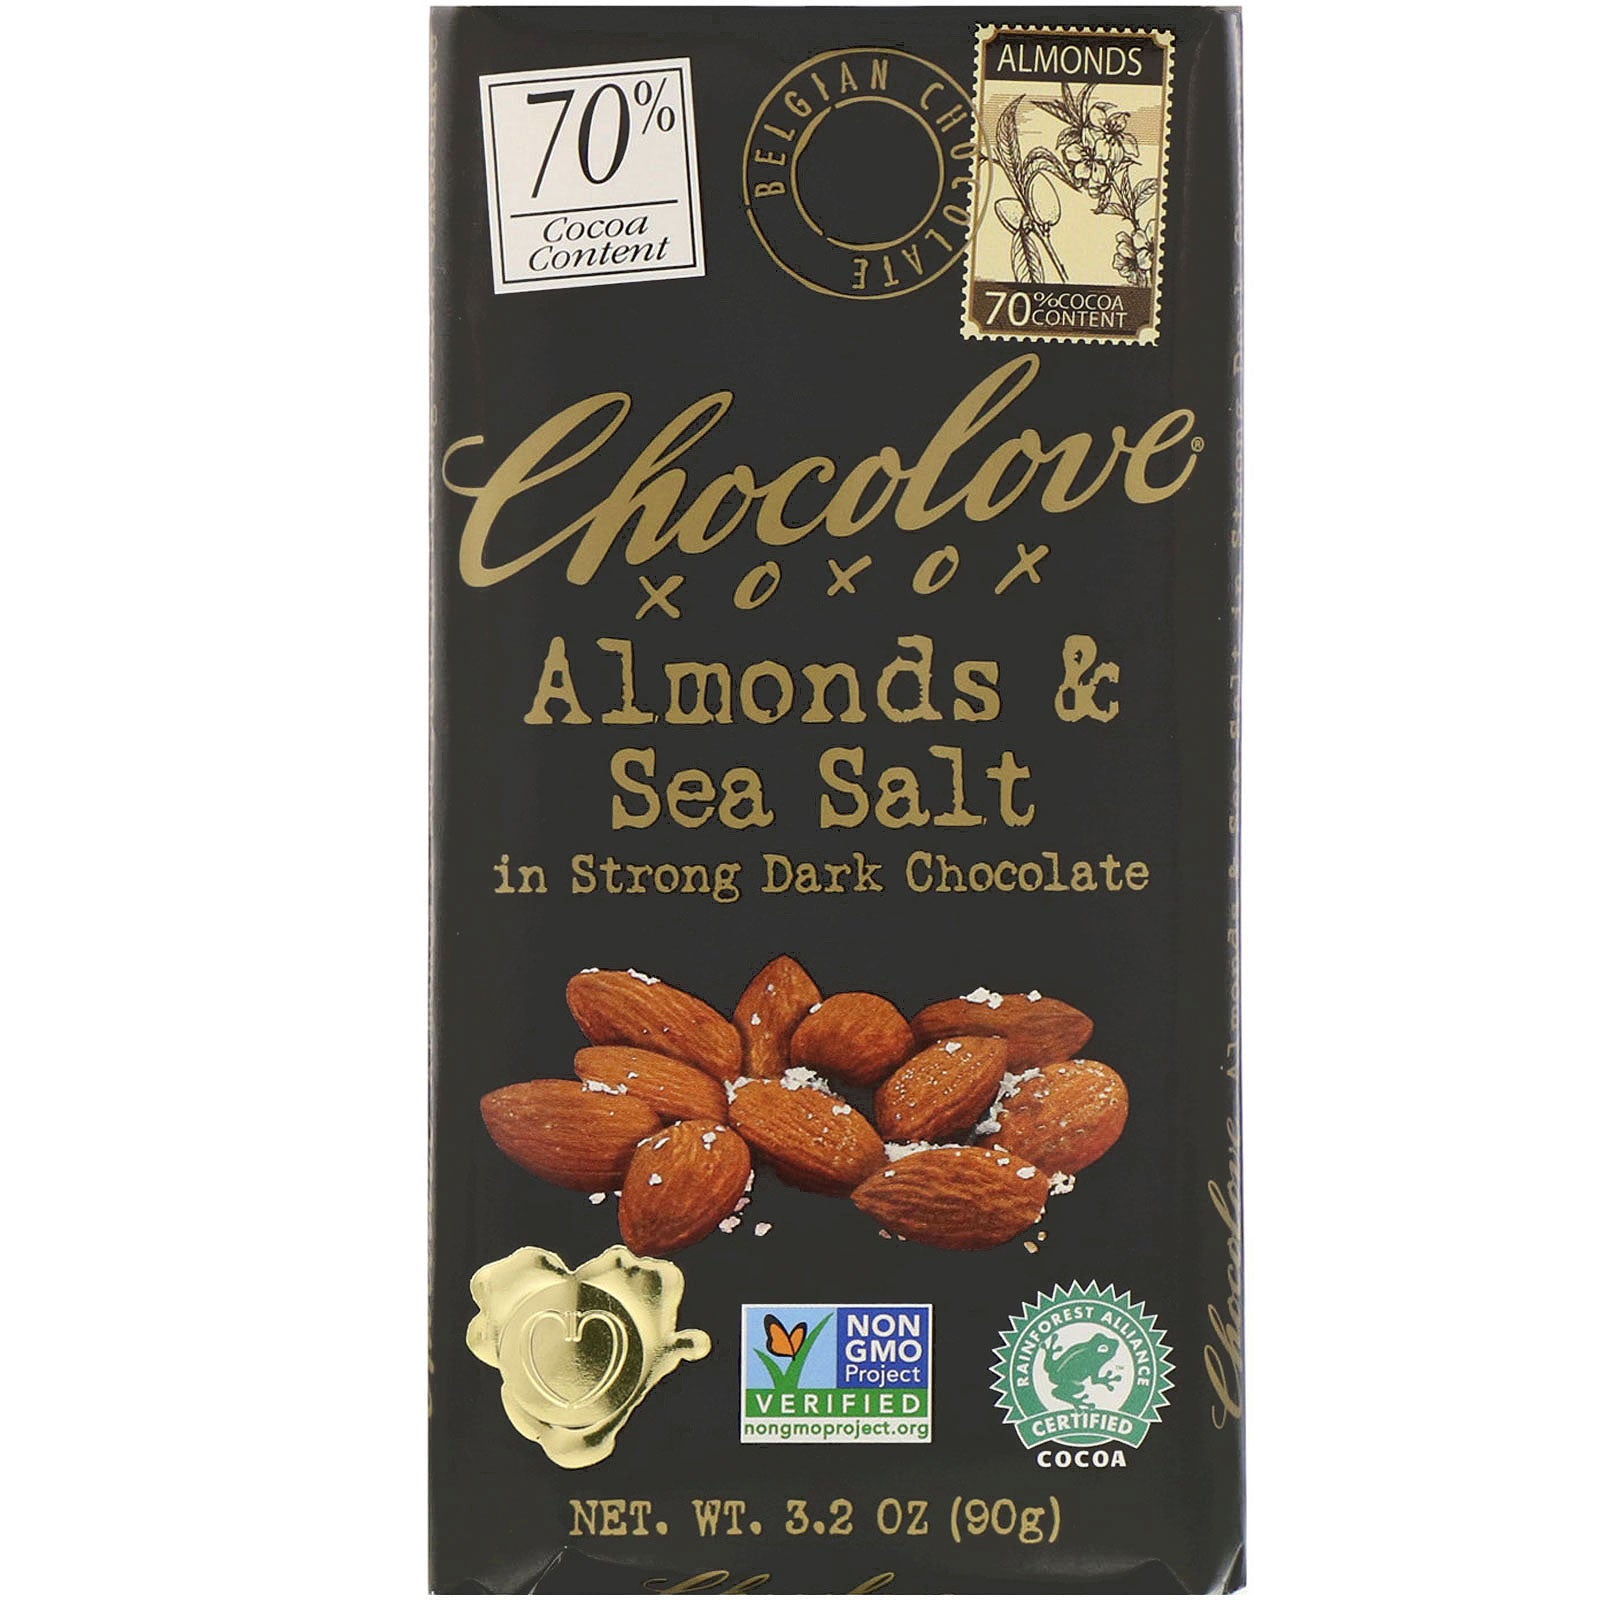 Chocolove, Almonds & Sea Salt in Strong Dark Chocolate, 70% Cocoa, 3.2 oz (90 g)